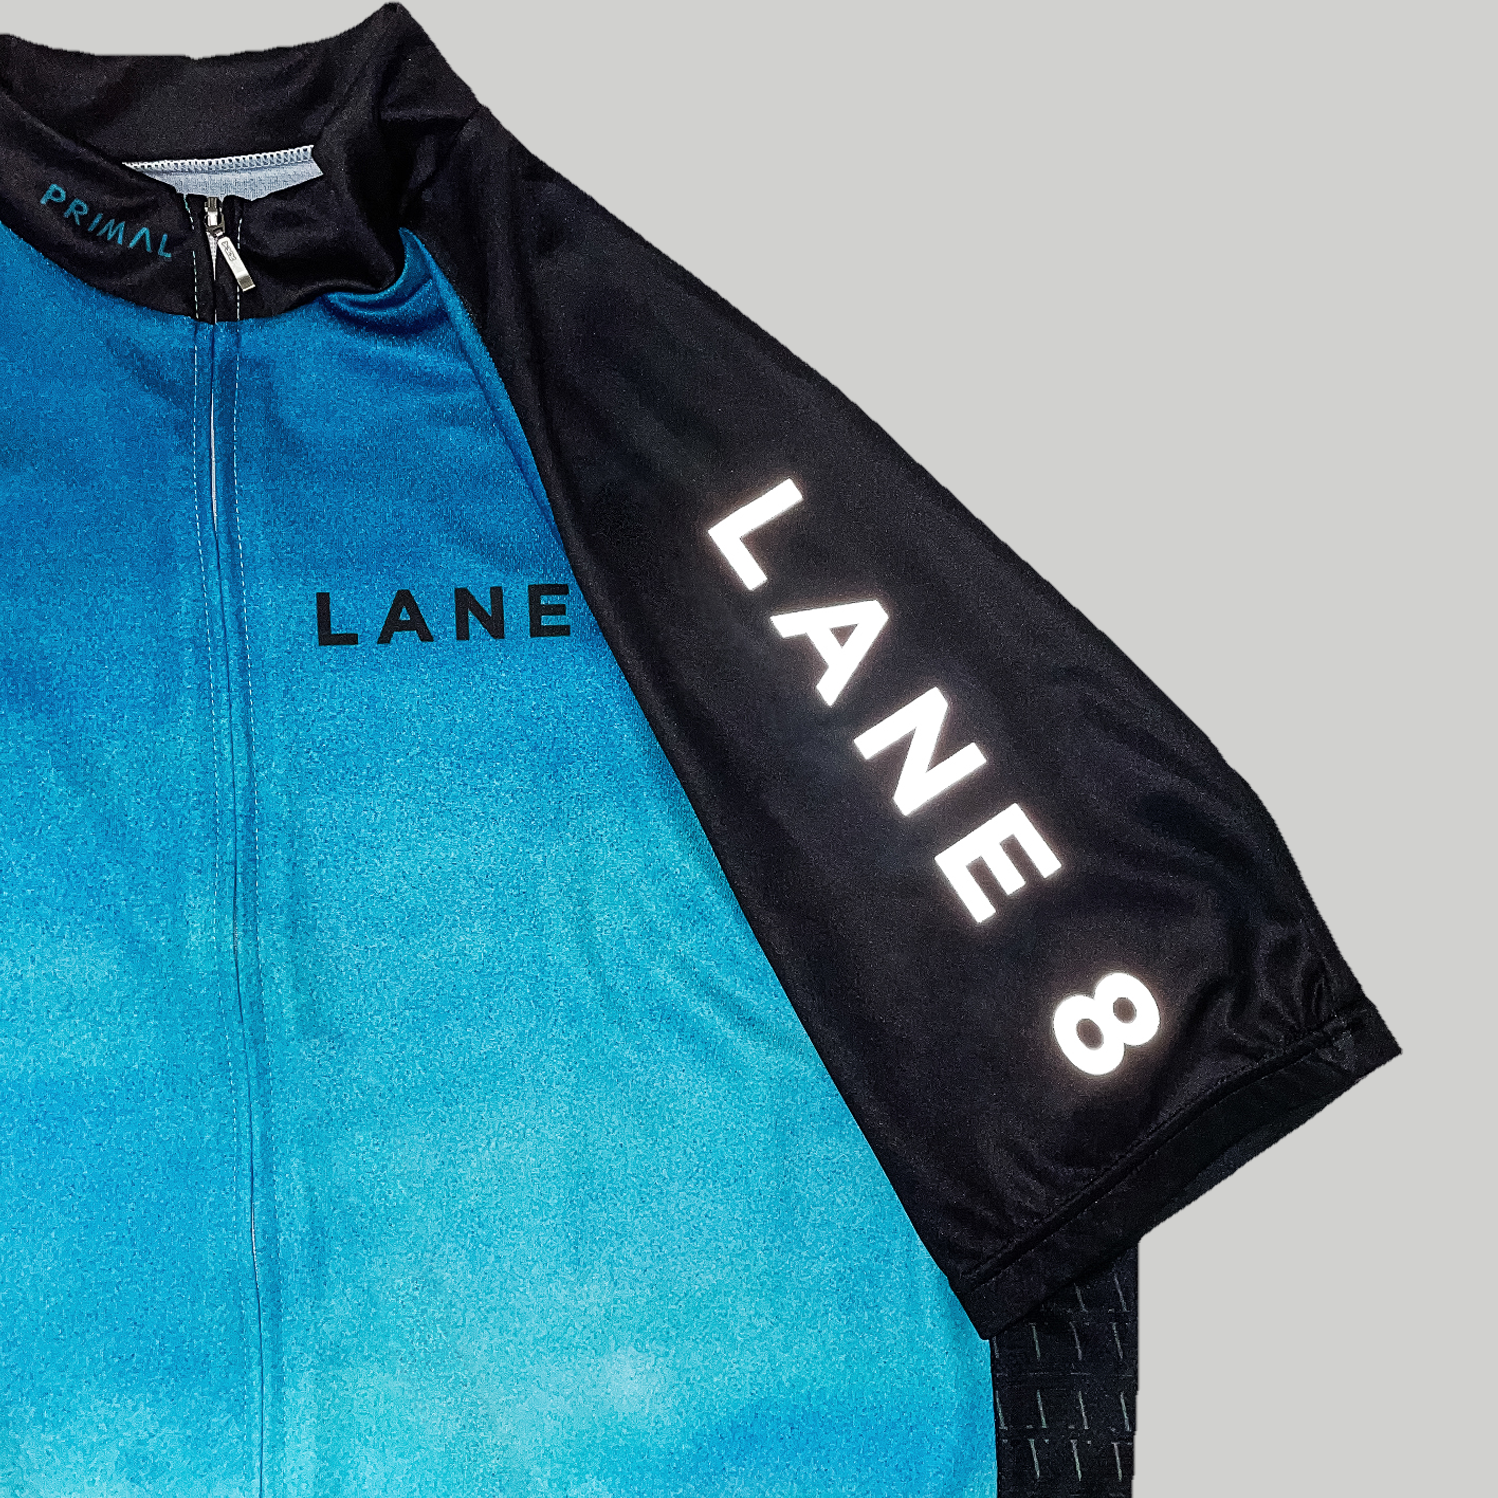 Lane 8 x Primal Cycling Jersey